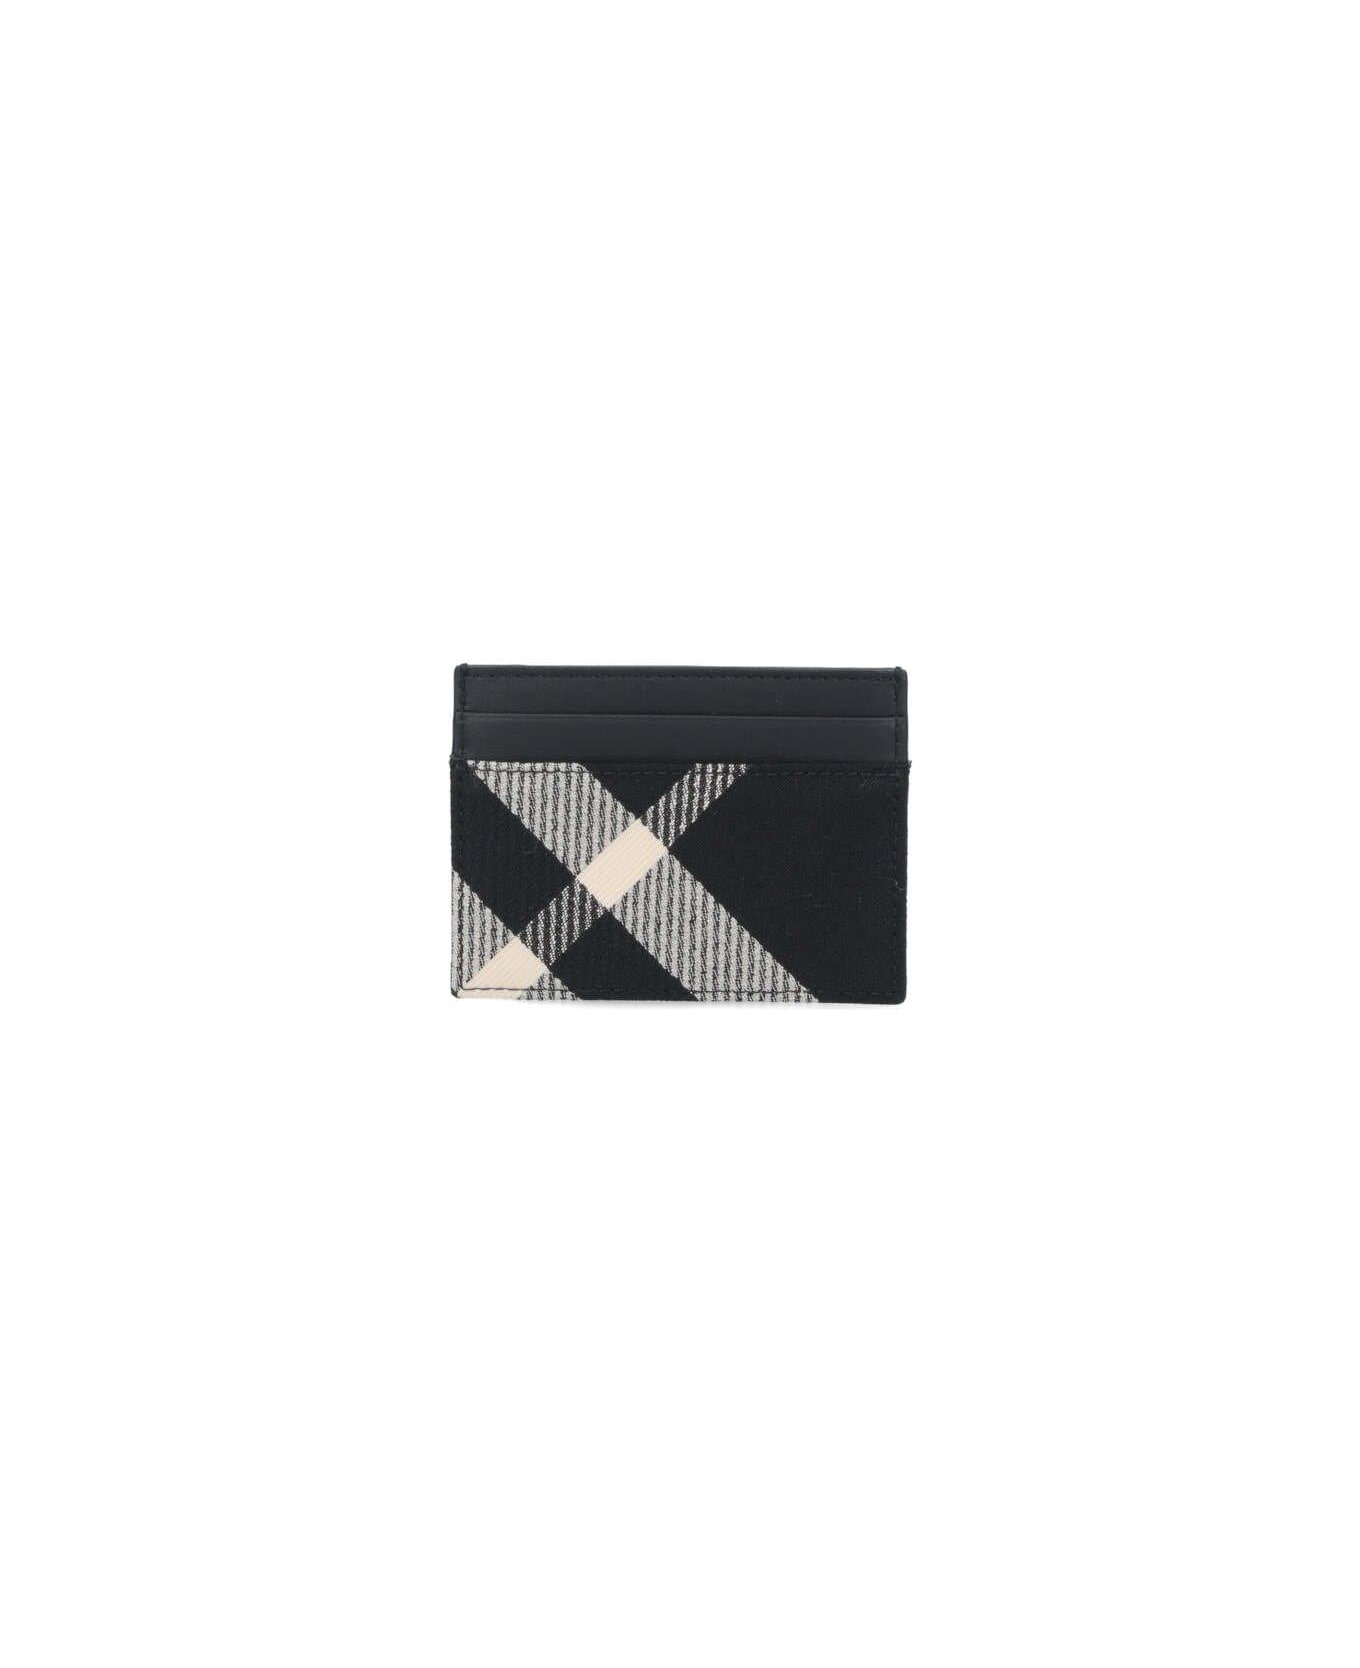 Burberry Checked Cardholder - Black calico 財布